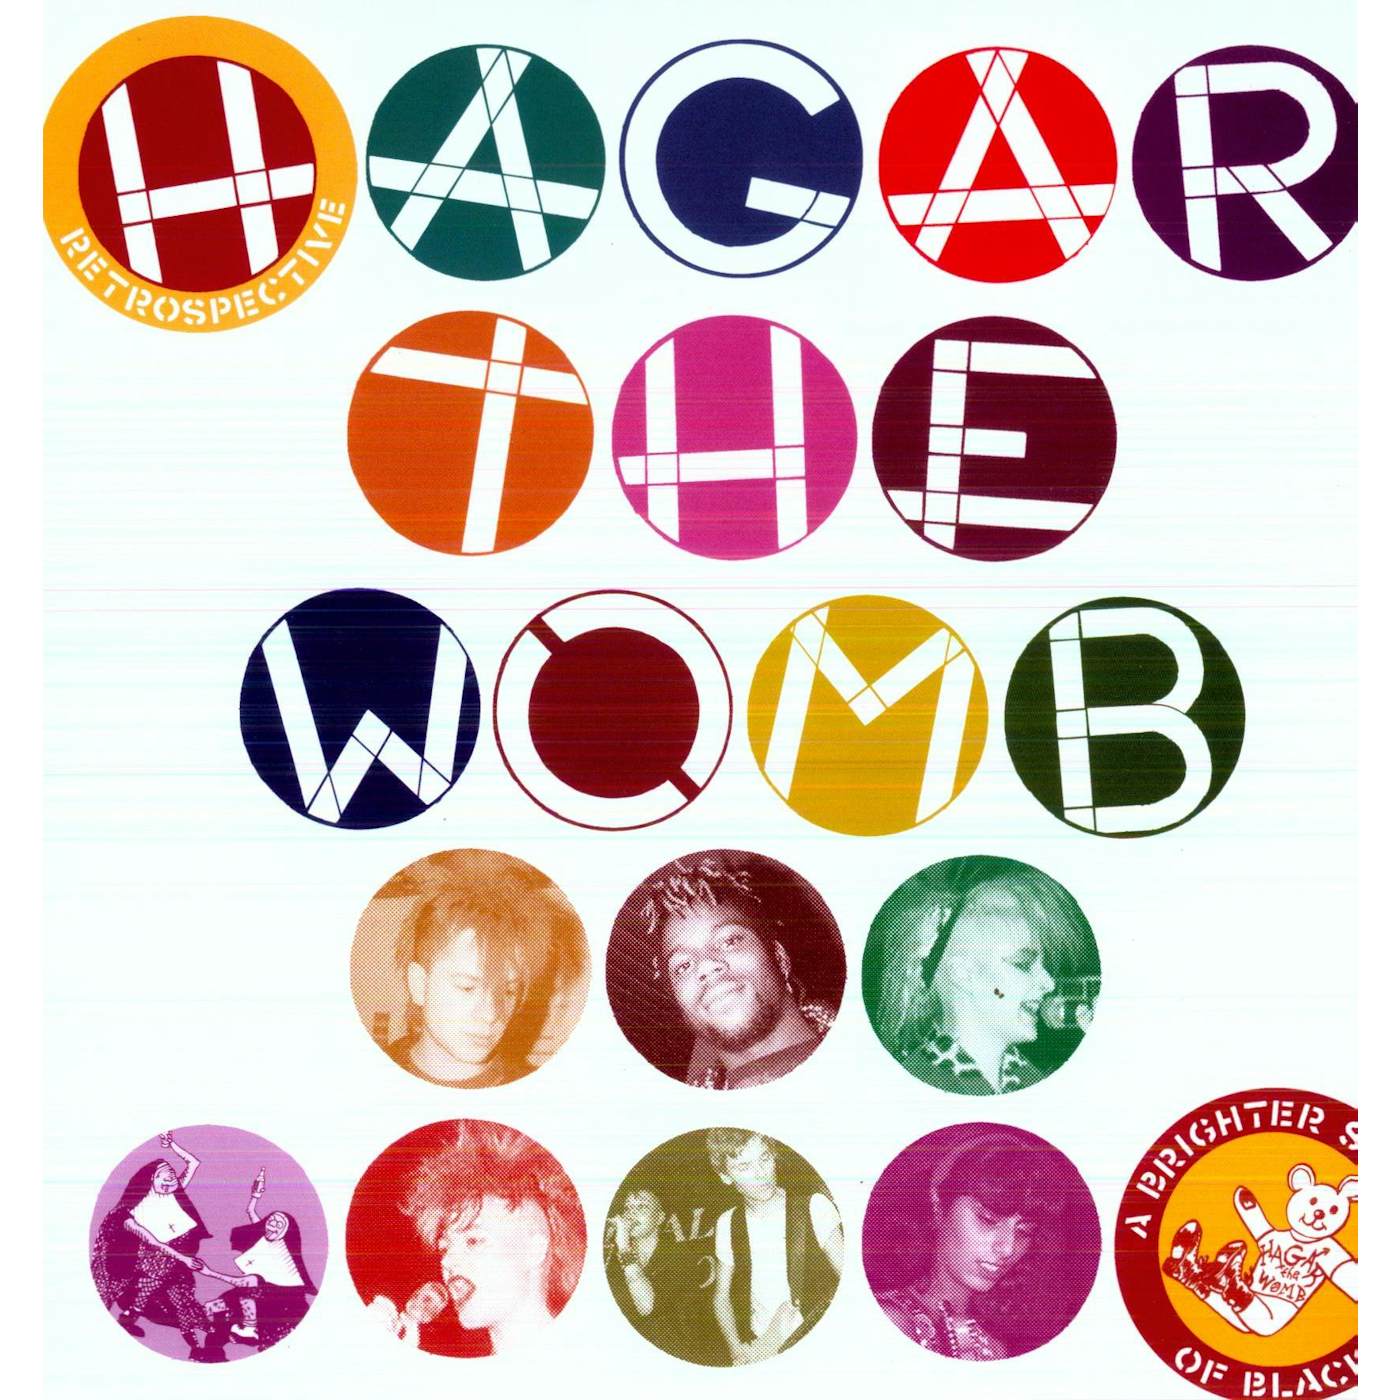 Hagar the Womb BRIGHTER SHADE OF BLACK Vinyl Record - Limited Edition